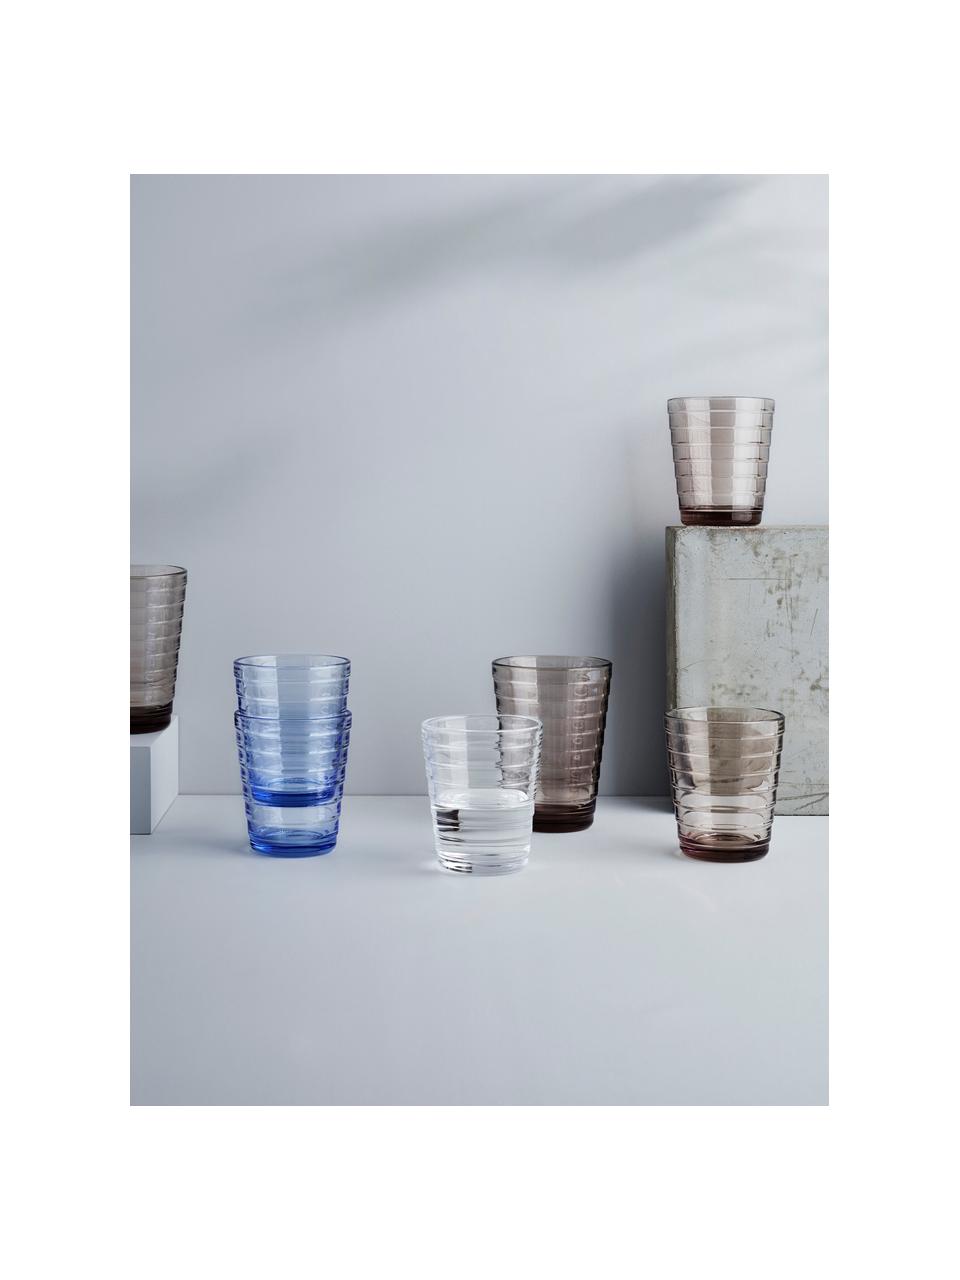 Waterglazen Aino Aalto, 2 stuks, Glas, Blauw, transparant, Ø 7 x H 9 cm, 220 ml